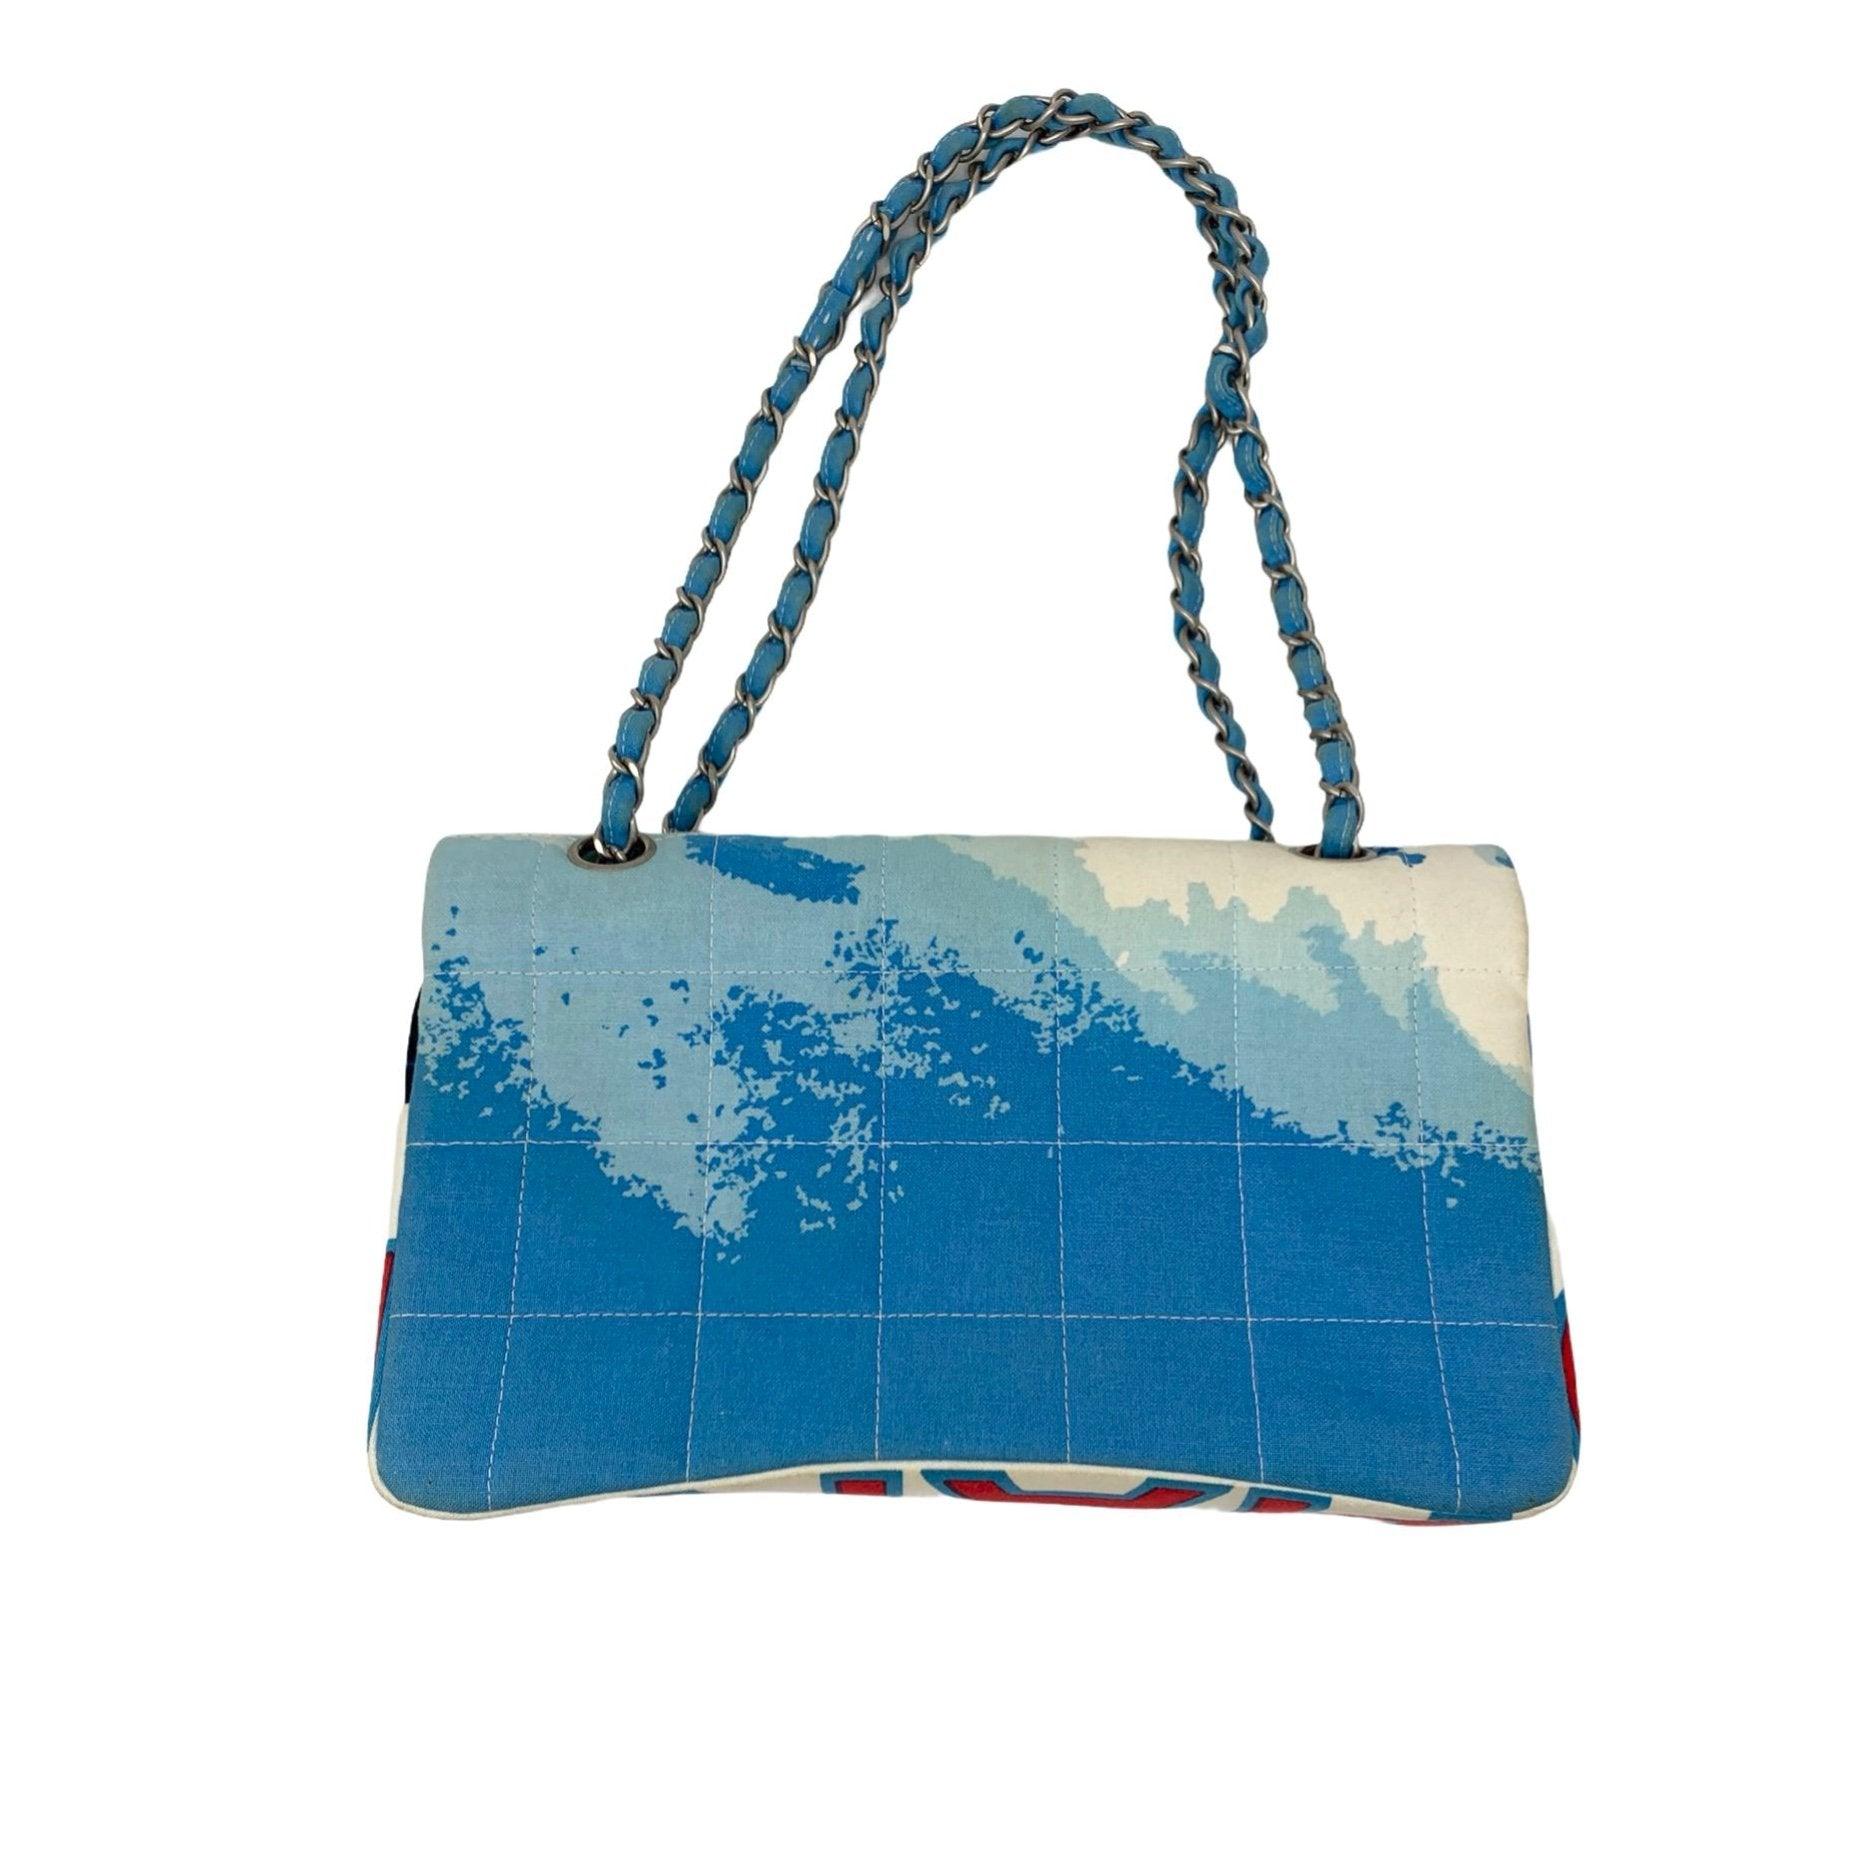 Treasures of NYC - Chanel Surf Flap Bag